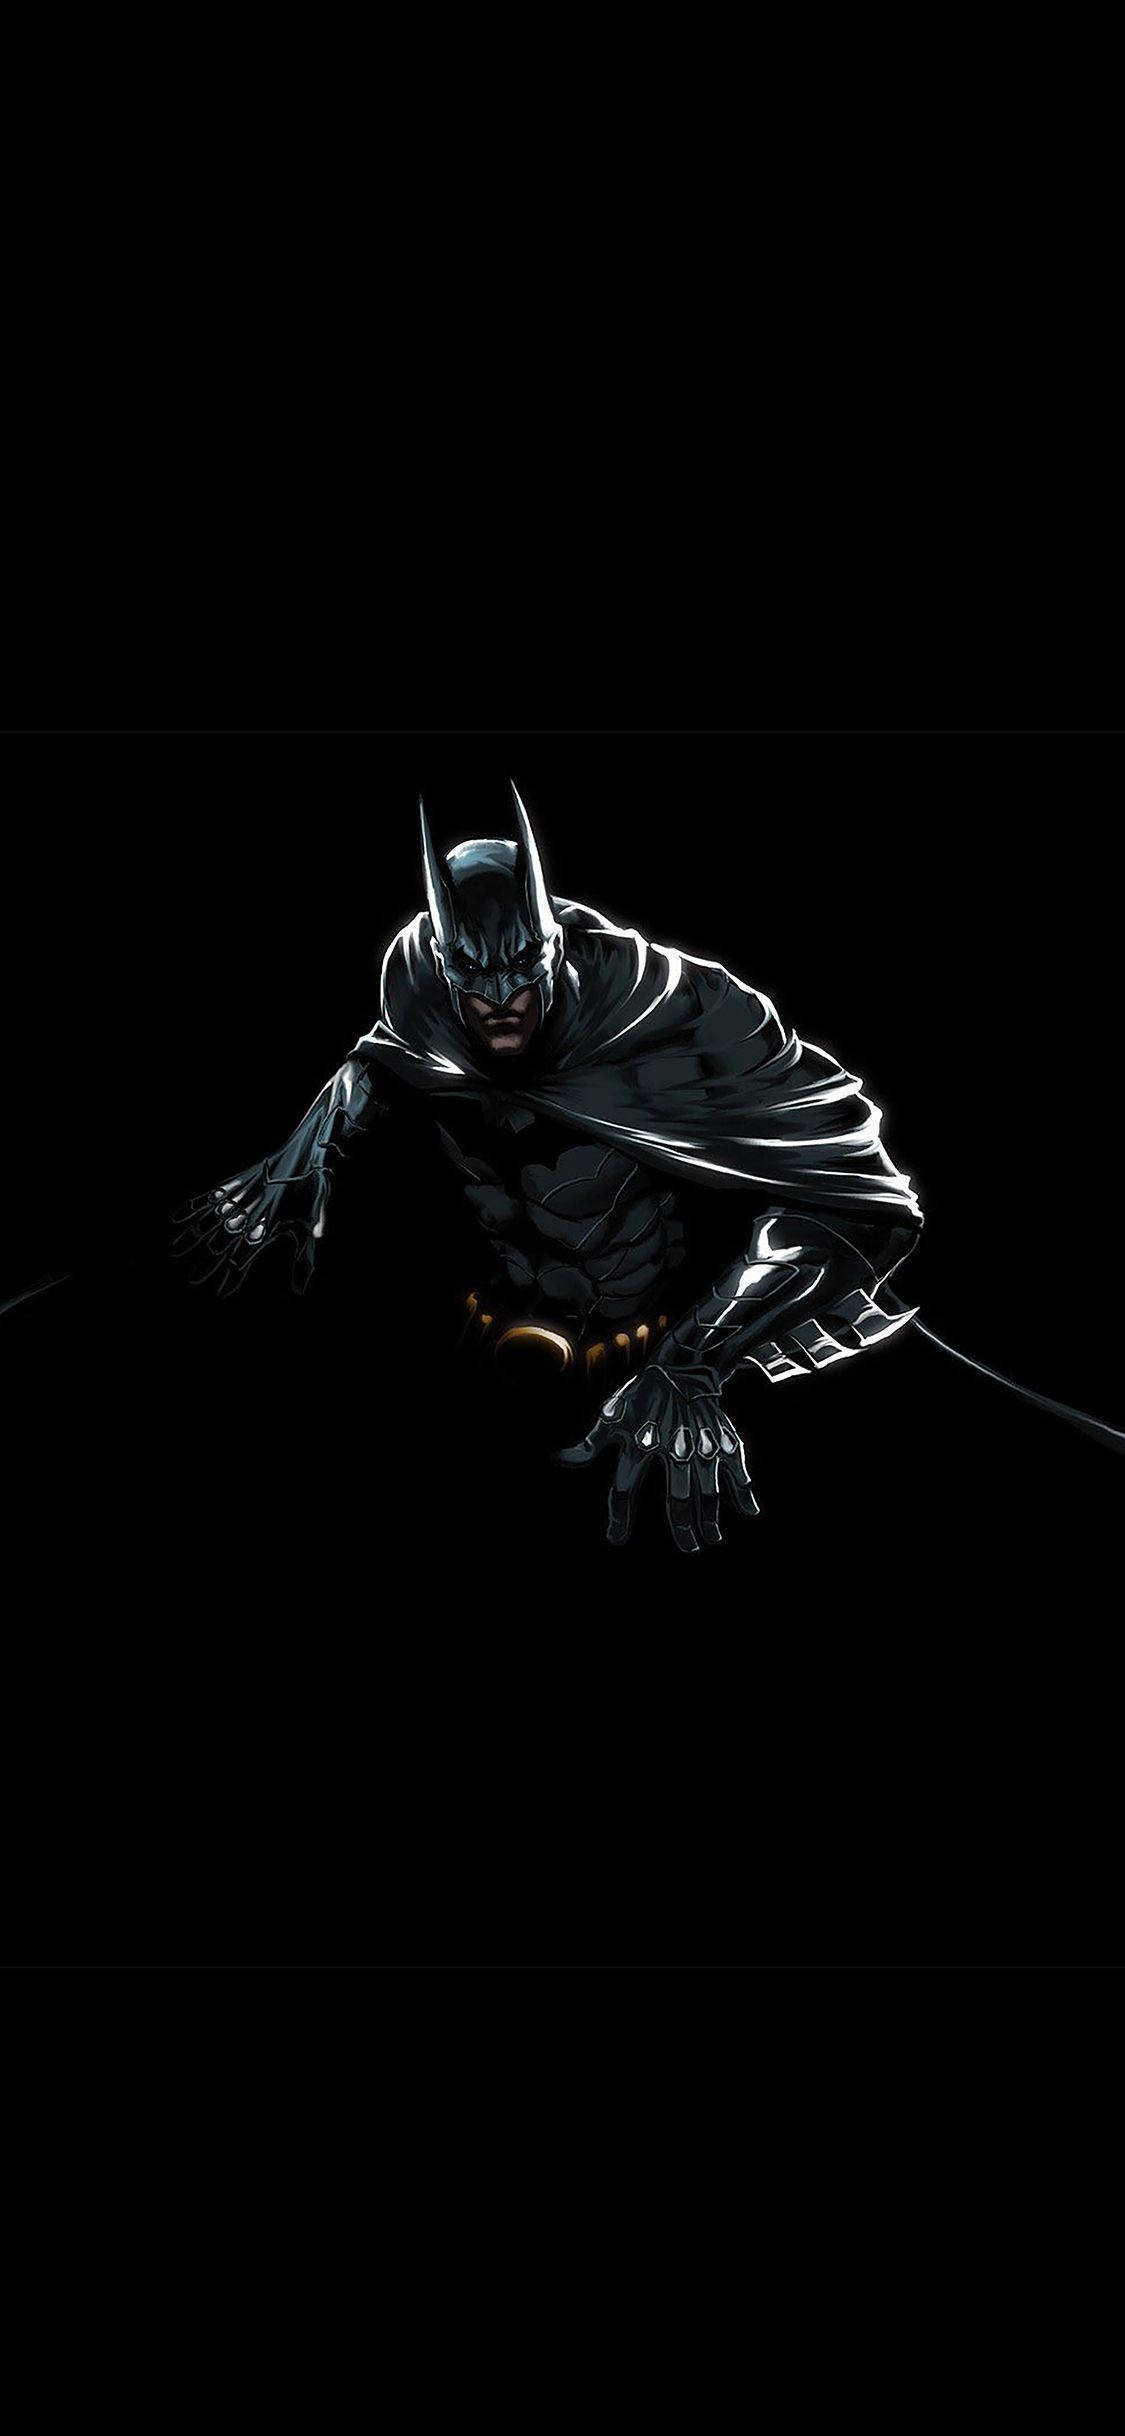 Batman Fanart iPhone X Wallpaper